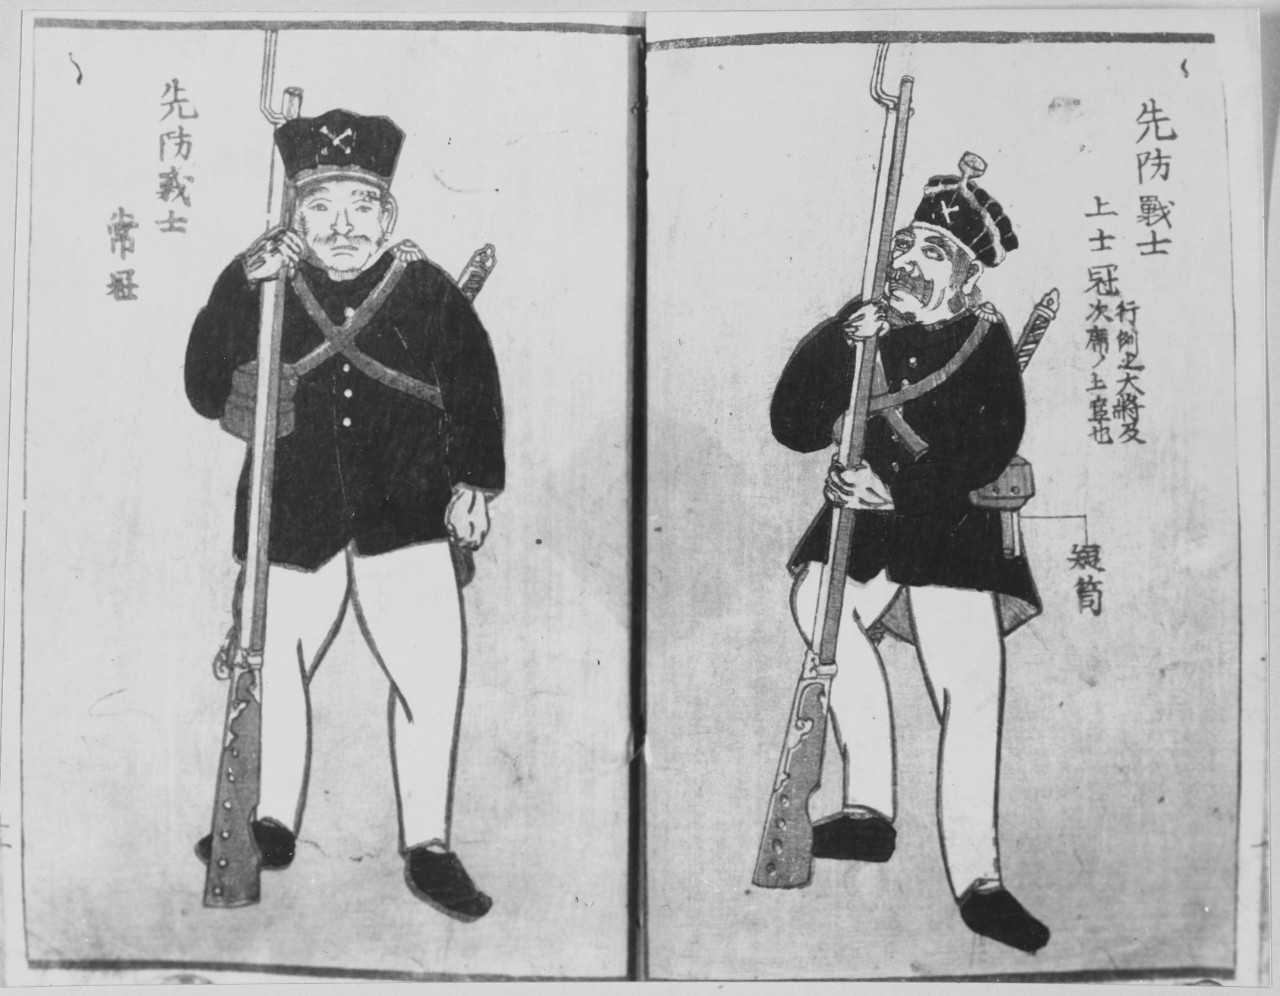 Japanese artwork depicting Perry in Japan, 1854